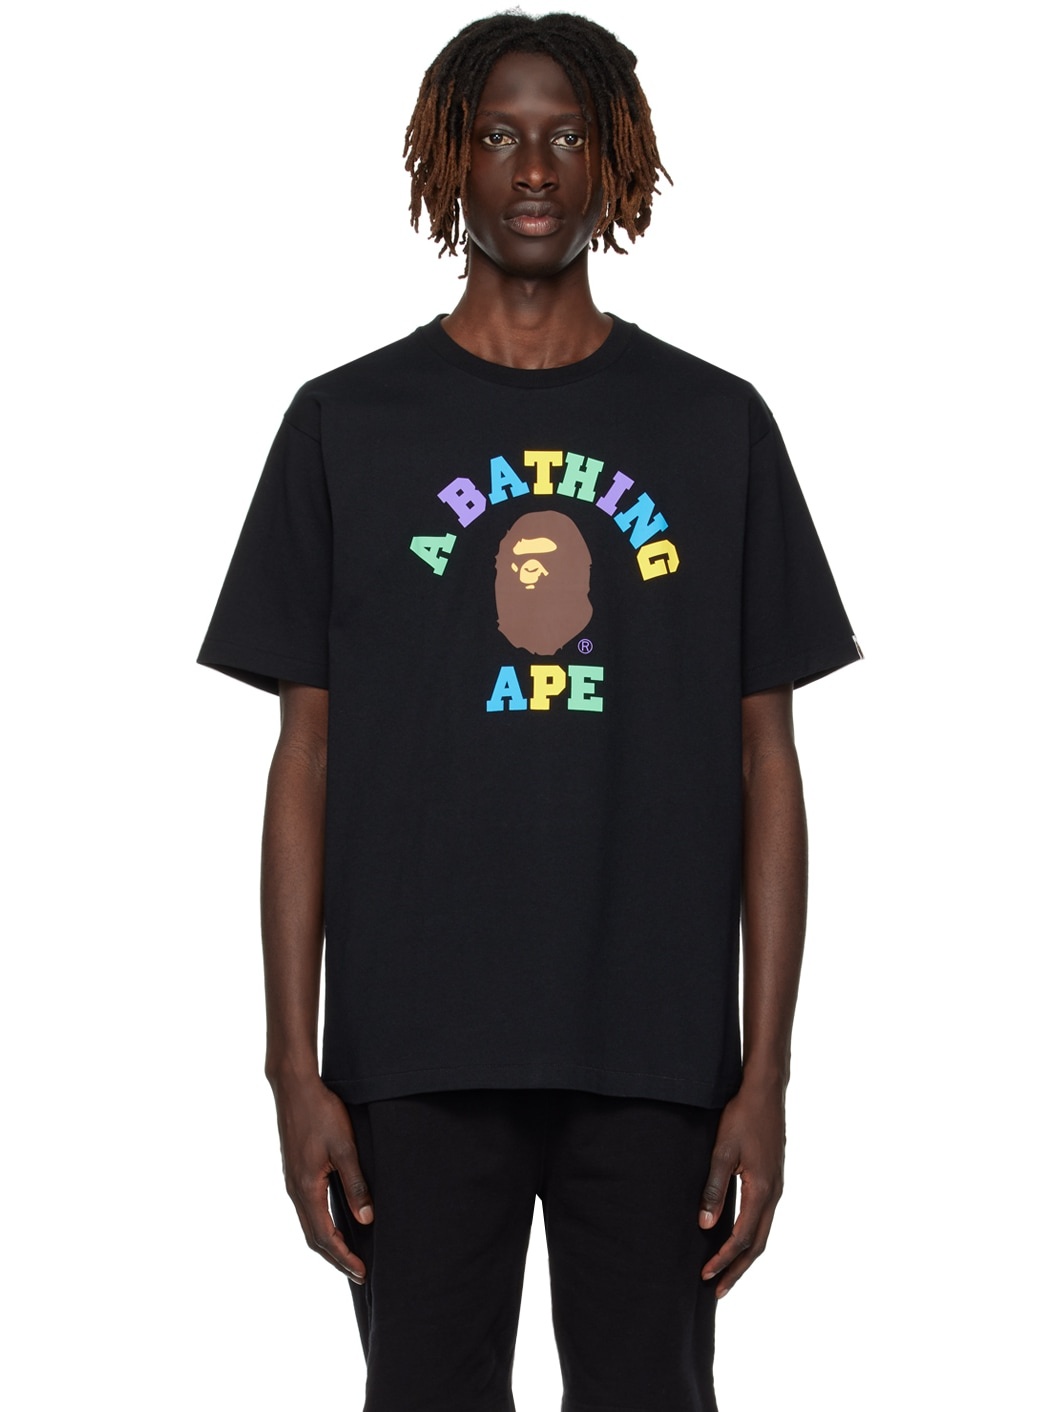 A BATHING APE® Black Printed T-Shirt | REVERSIBLE